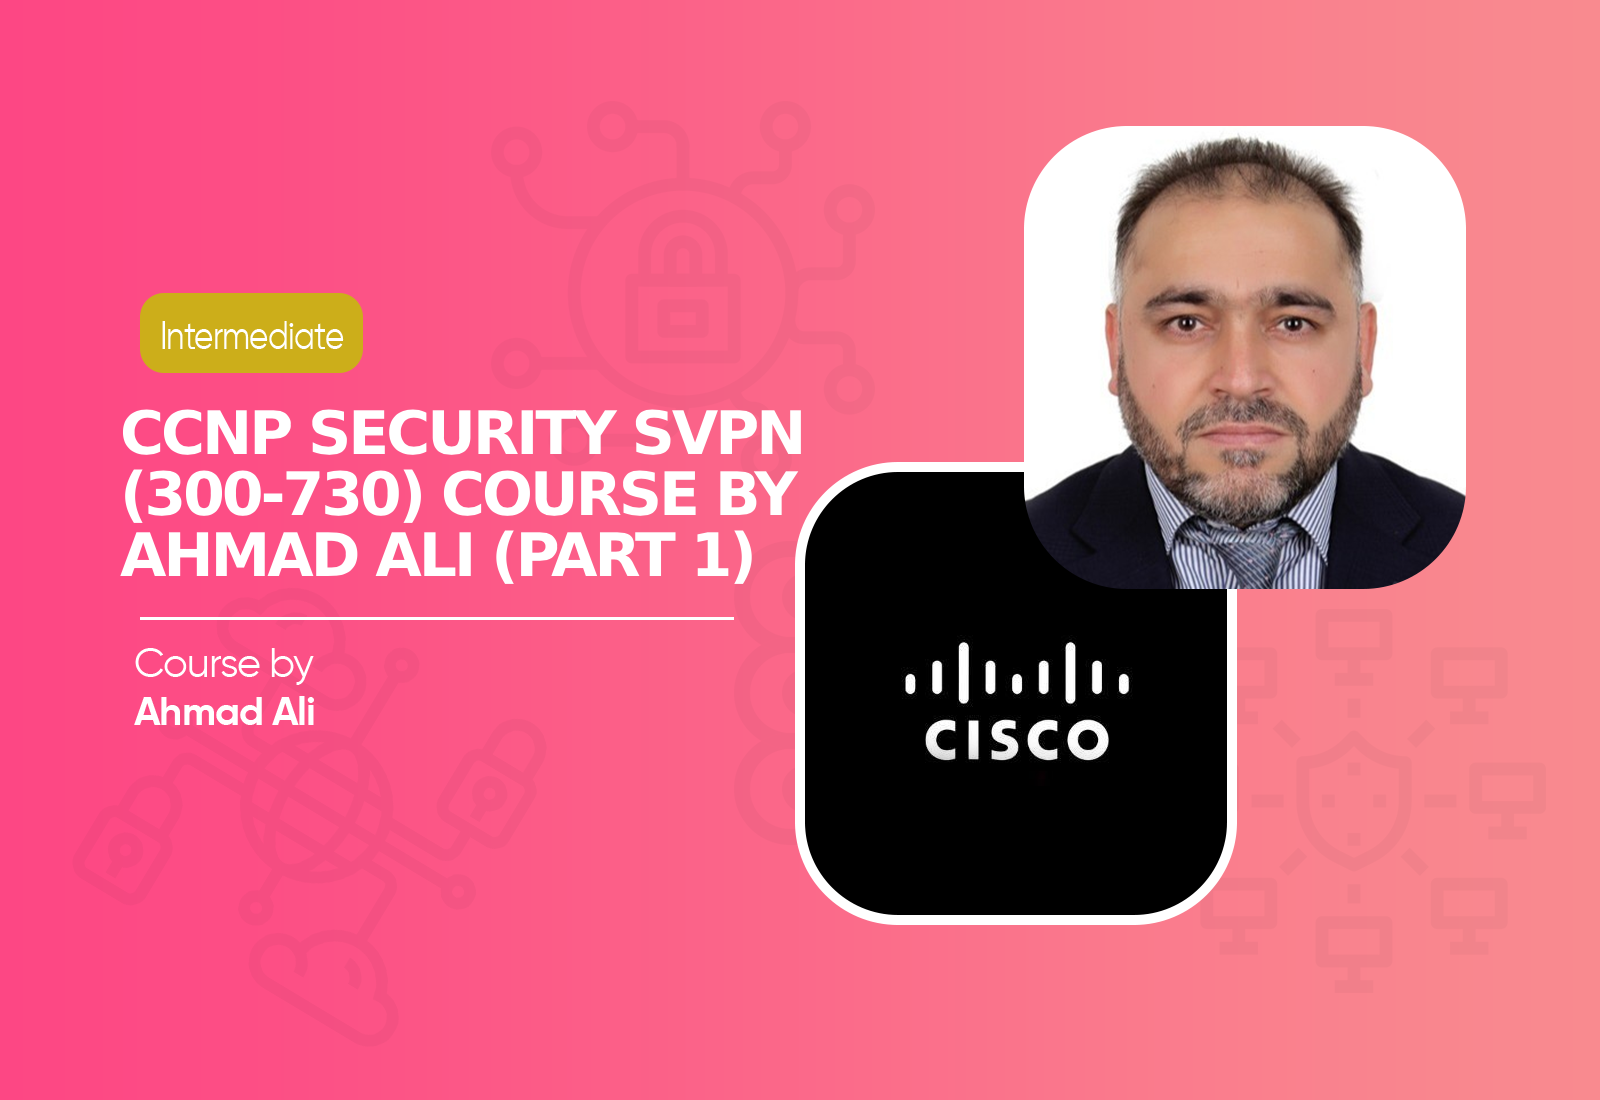 CCNP Security SVPN (300-730) Course By Ahmad Ali (Part 1)